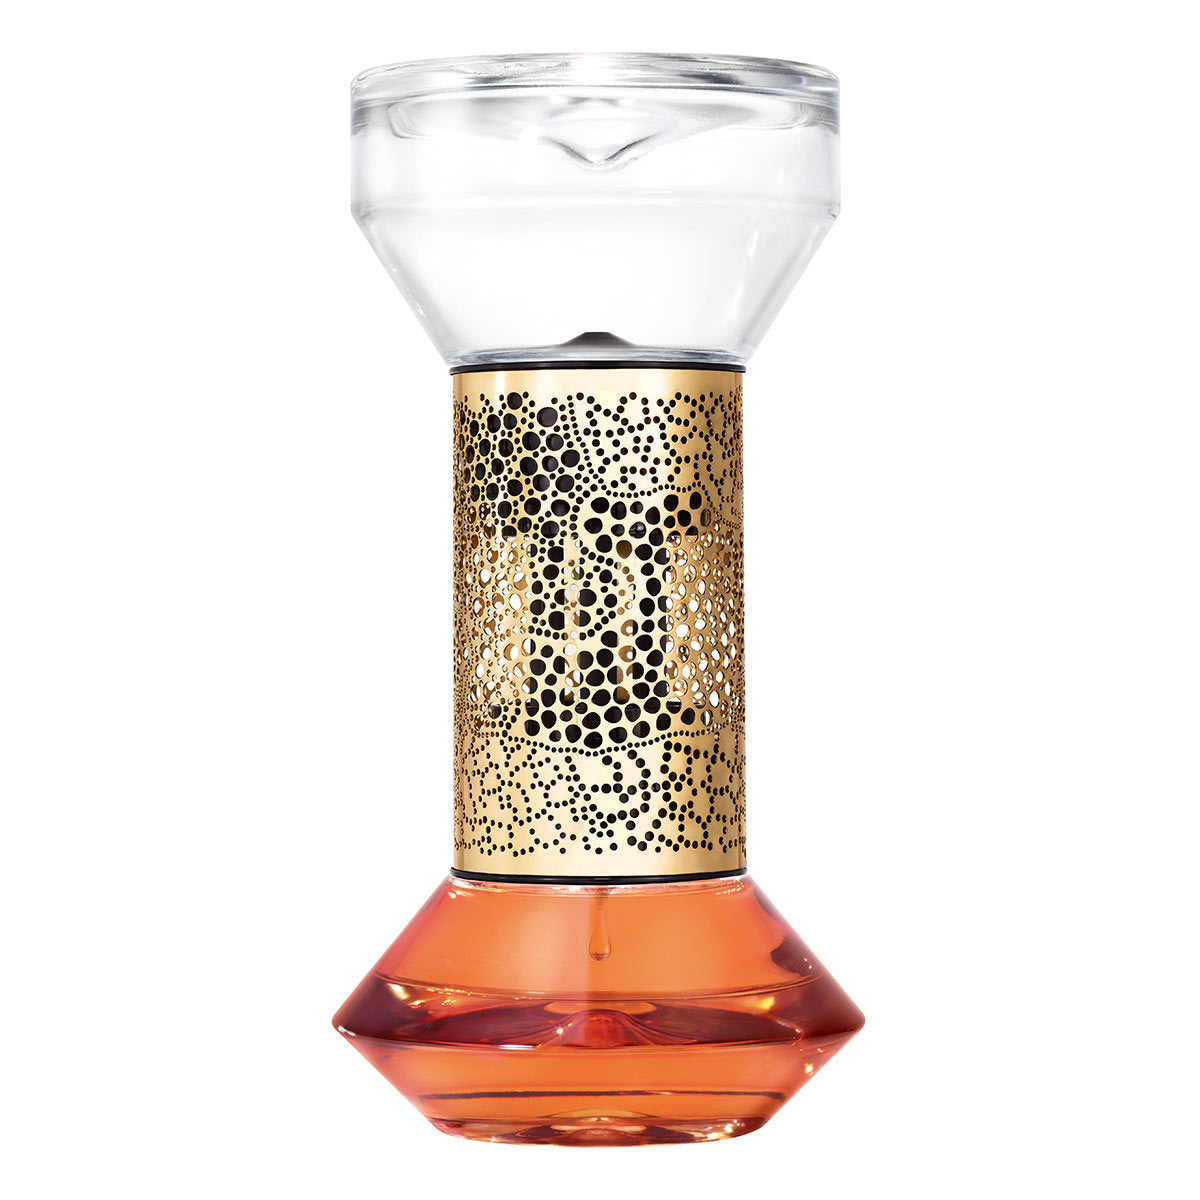 Primary image of Orange Blossom Flower Hourglass Diffuser